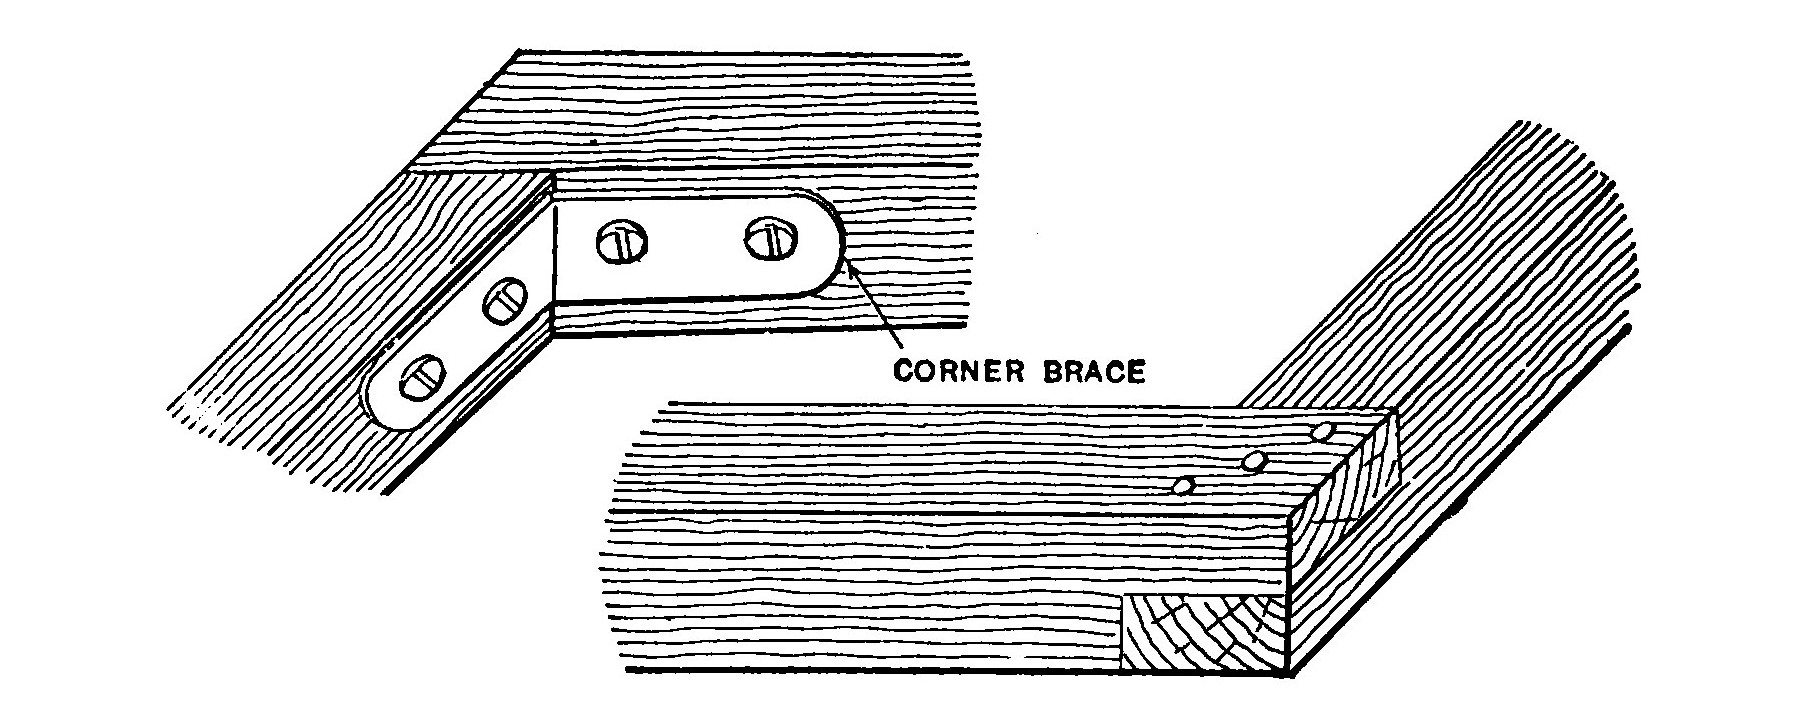 Fig. 14.—Corners of horizontal rudder plane.